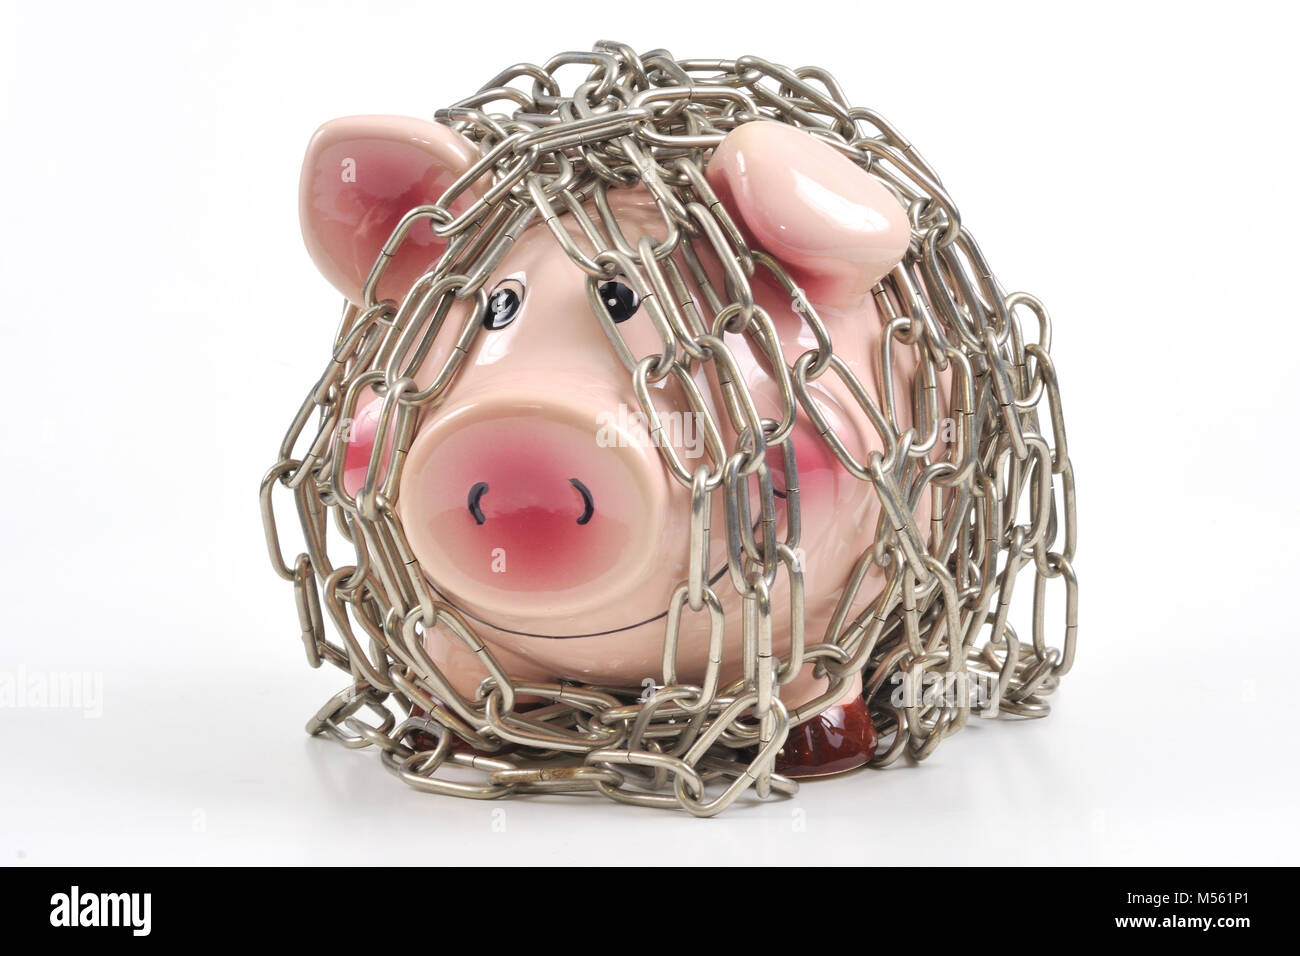 Piggy bank Stock Photo